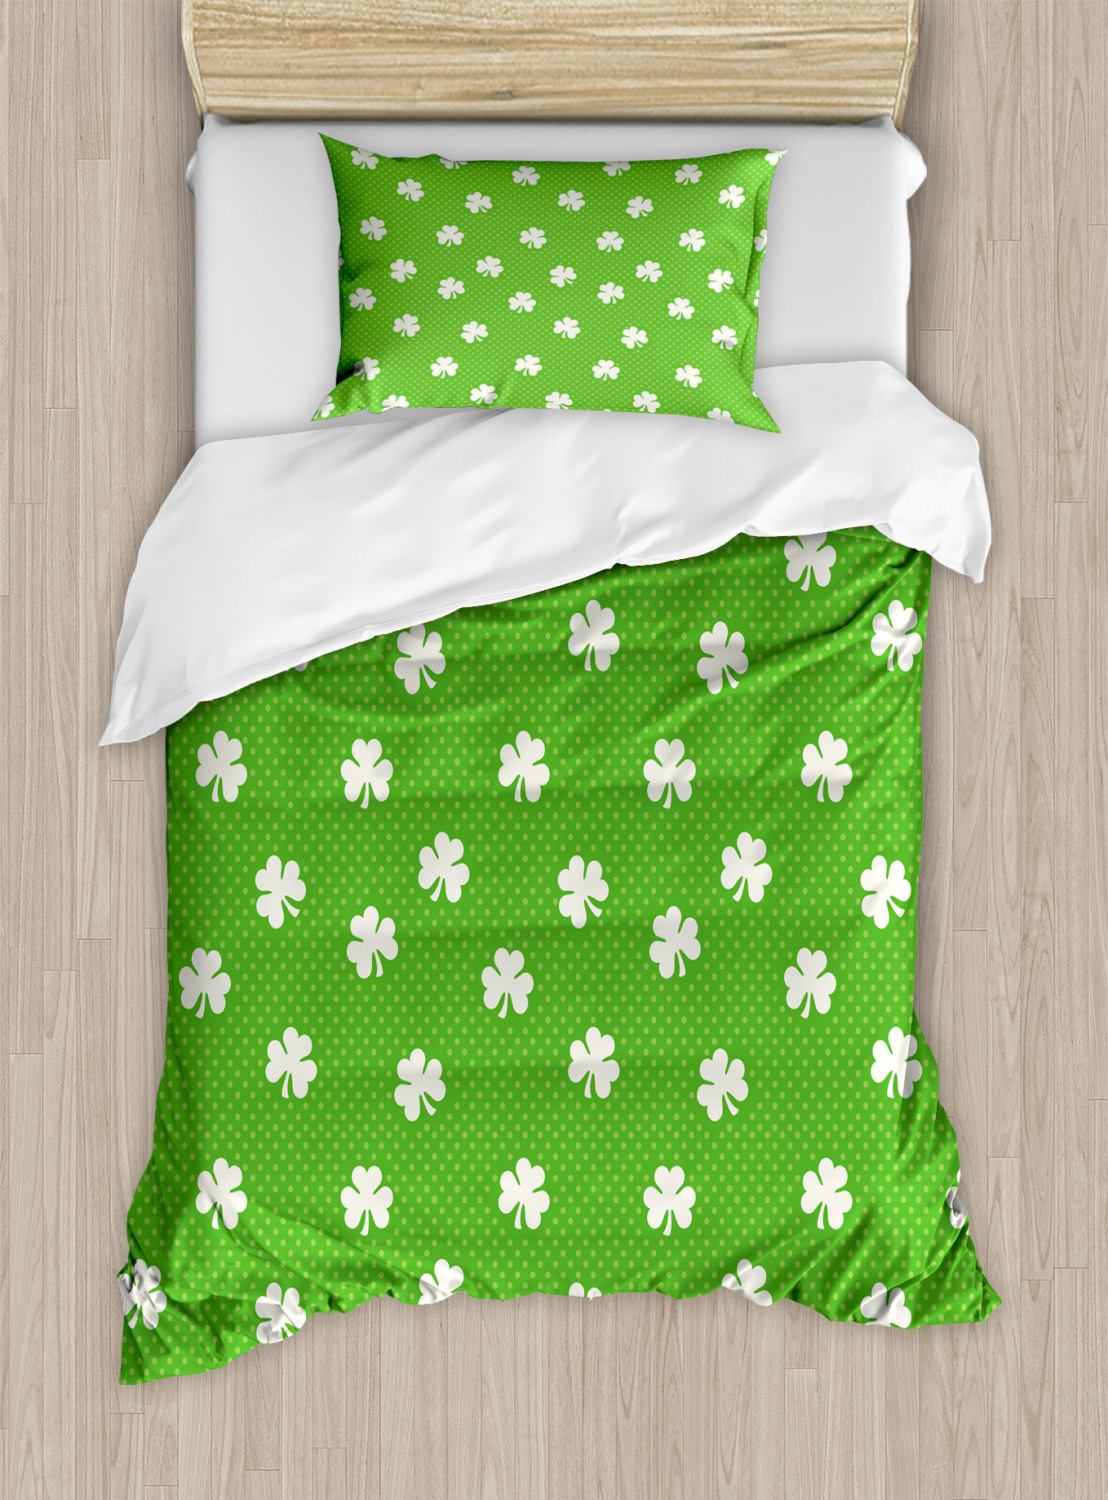 Irish Duvet Cover Set With Pillow Shams Polka Dots And Shamrocks